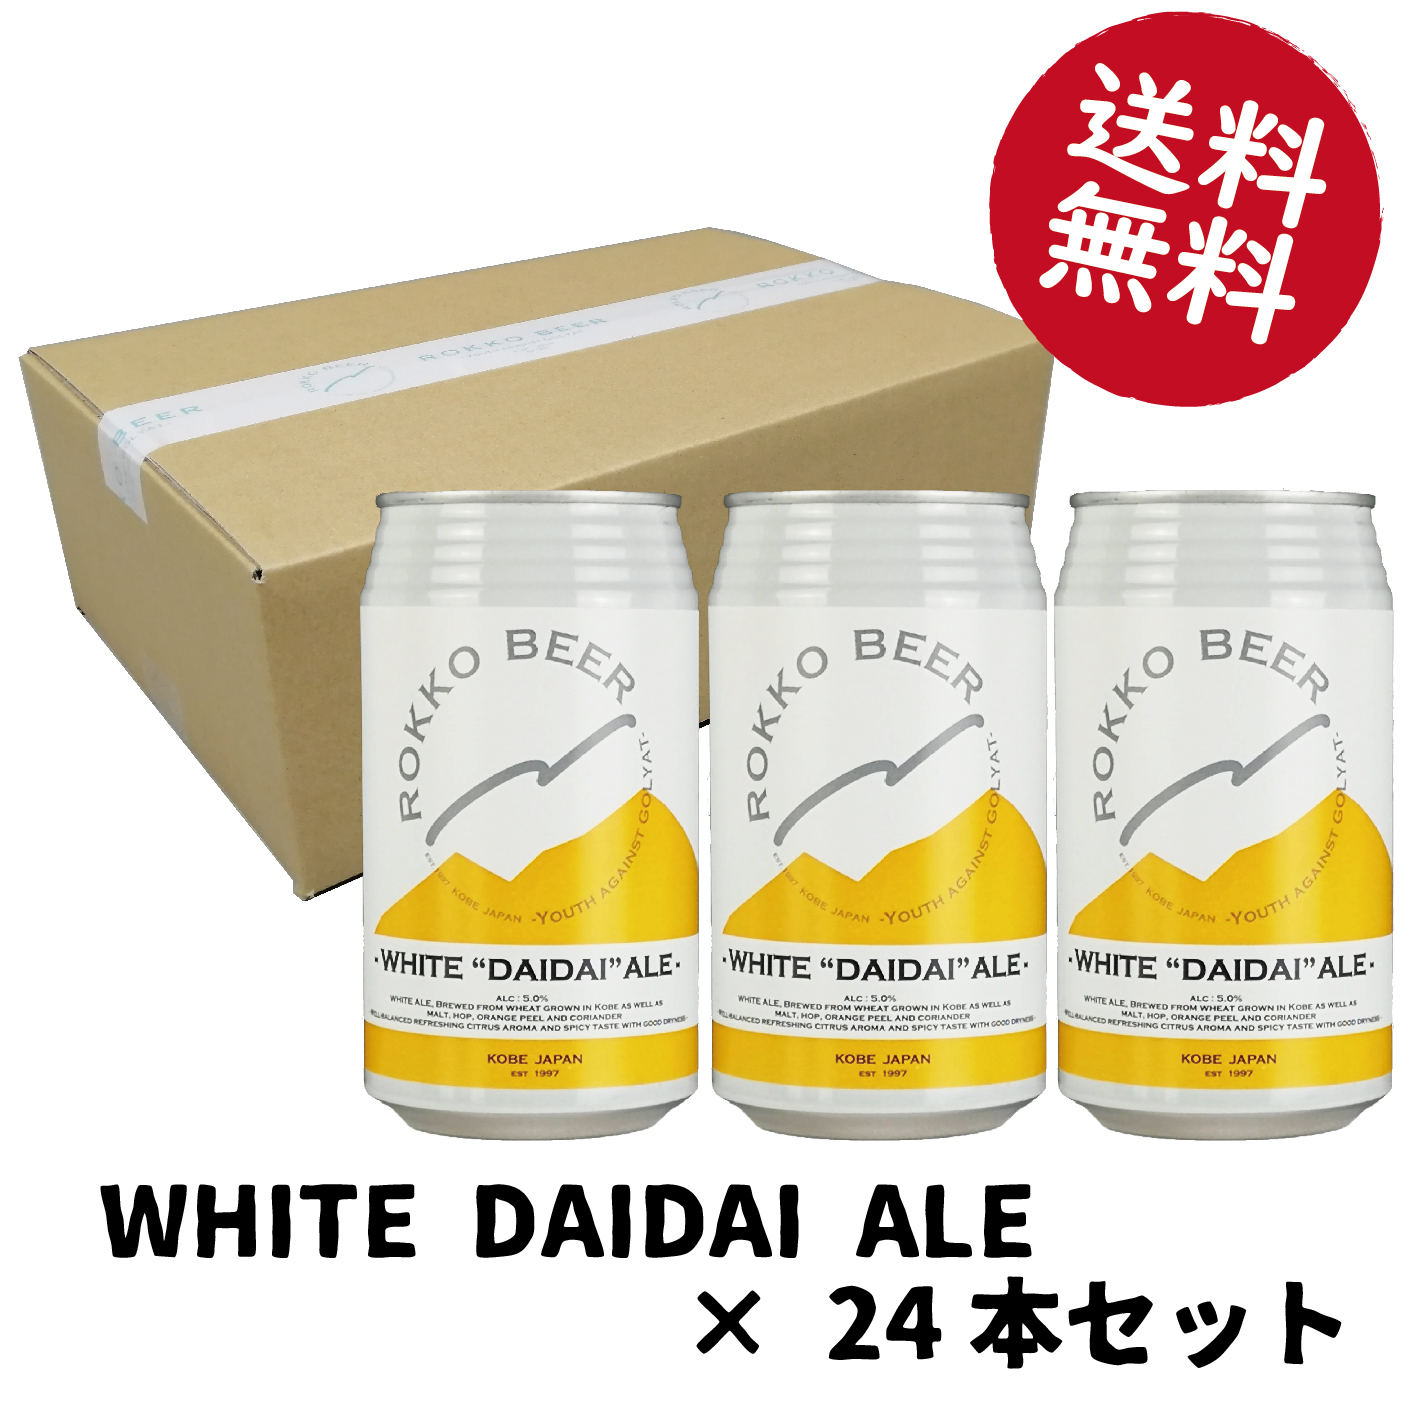 神戸・六甲ビール醸造所 / セット商品